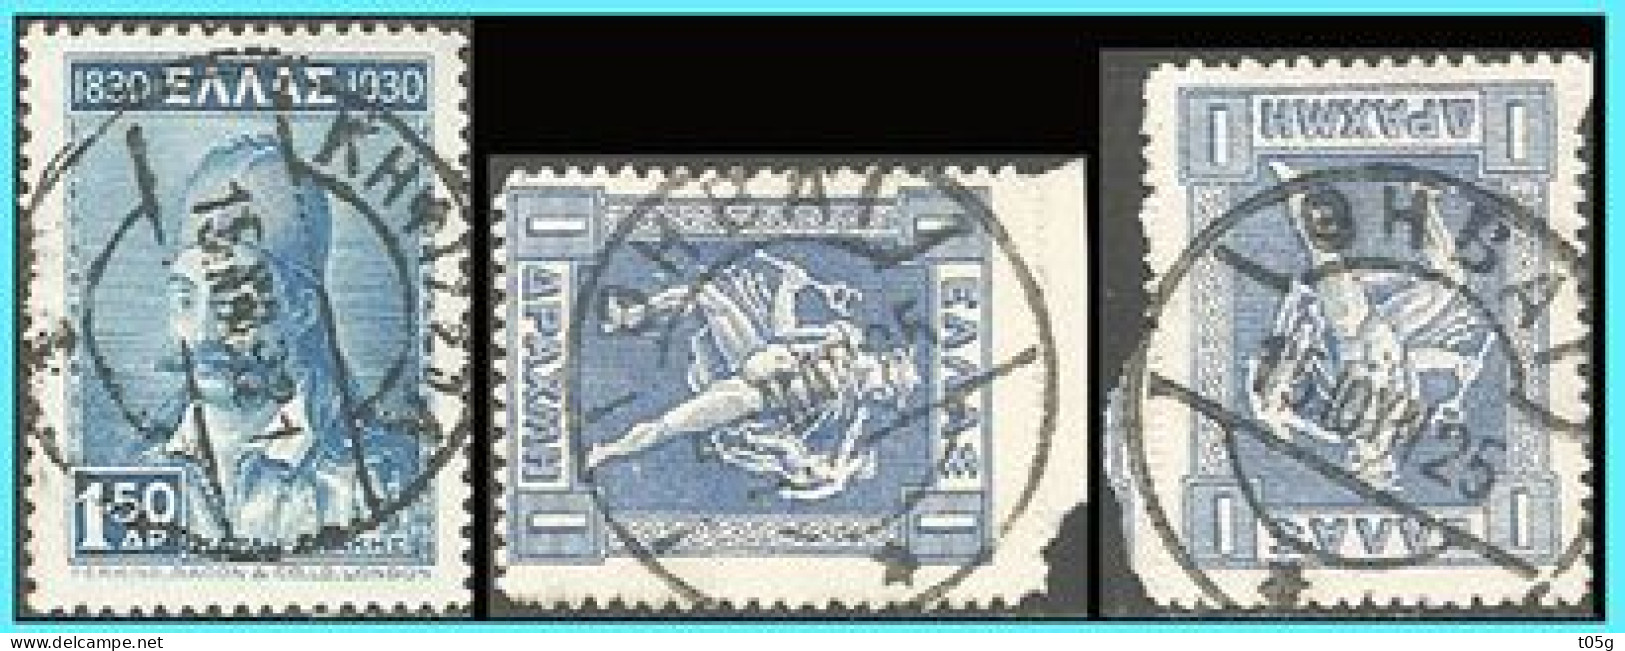 GREECE-GRECE- HELLAS 1913: Canc. (ΚΗΦΙΣΙΑ ΝΟΕ 21) (ΘΗΒΑΙ 1 ΙΟΥΝ 25) On 1drx Lithographic  used - Usati